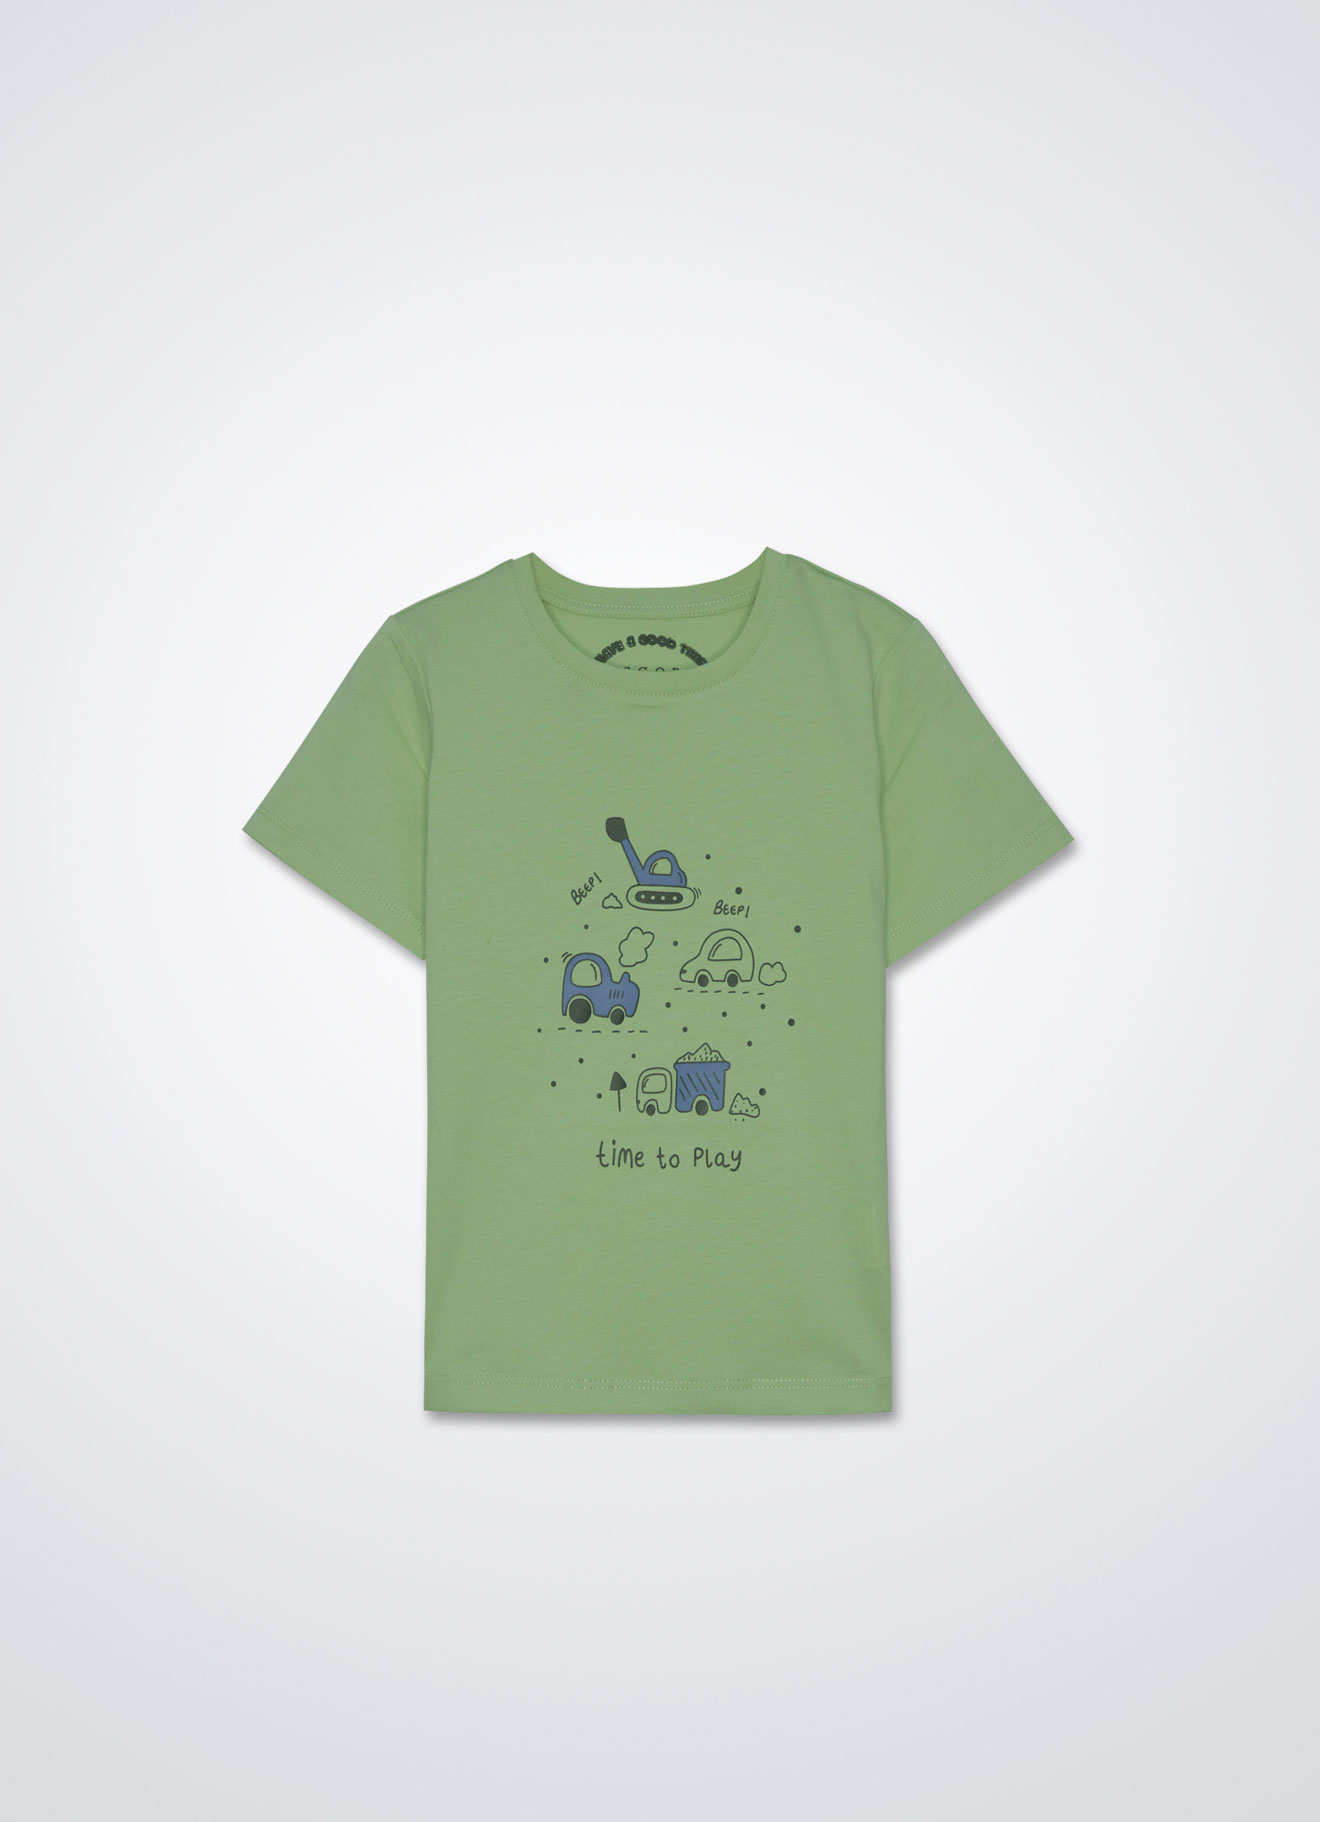 Foam-Green by T-Shirt